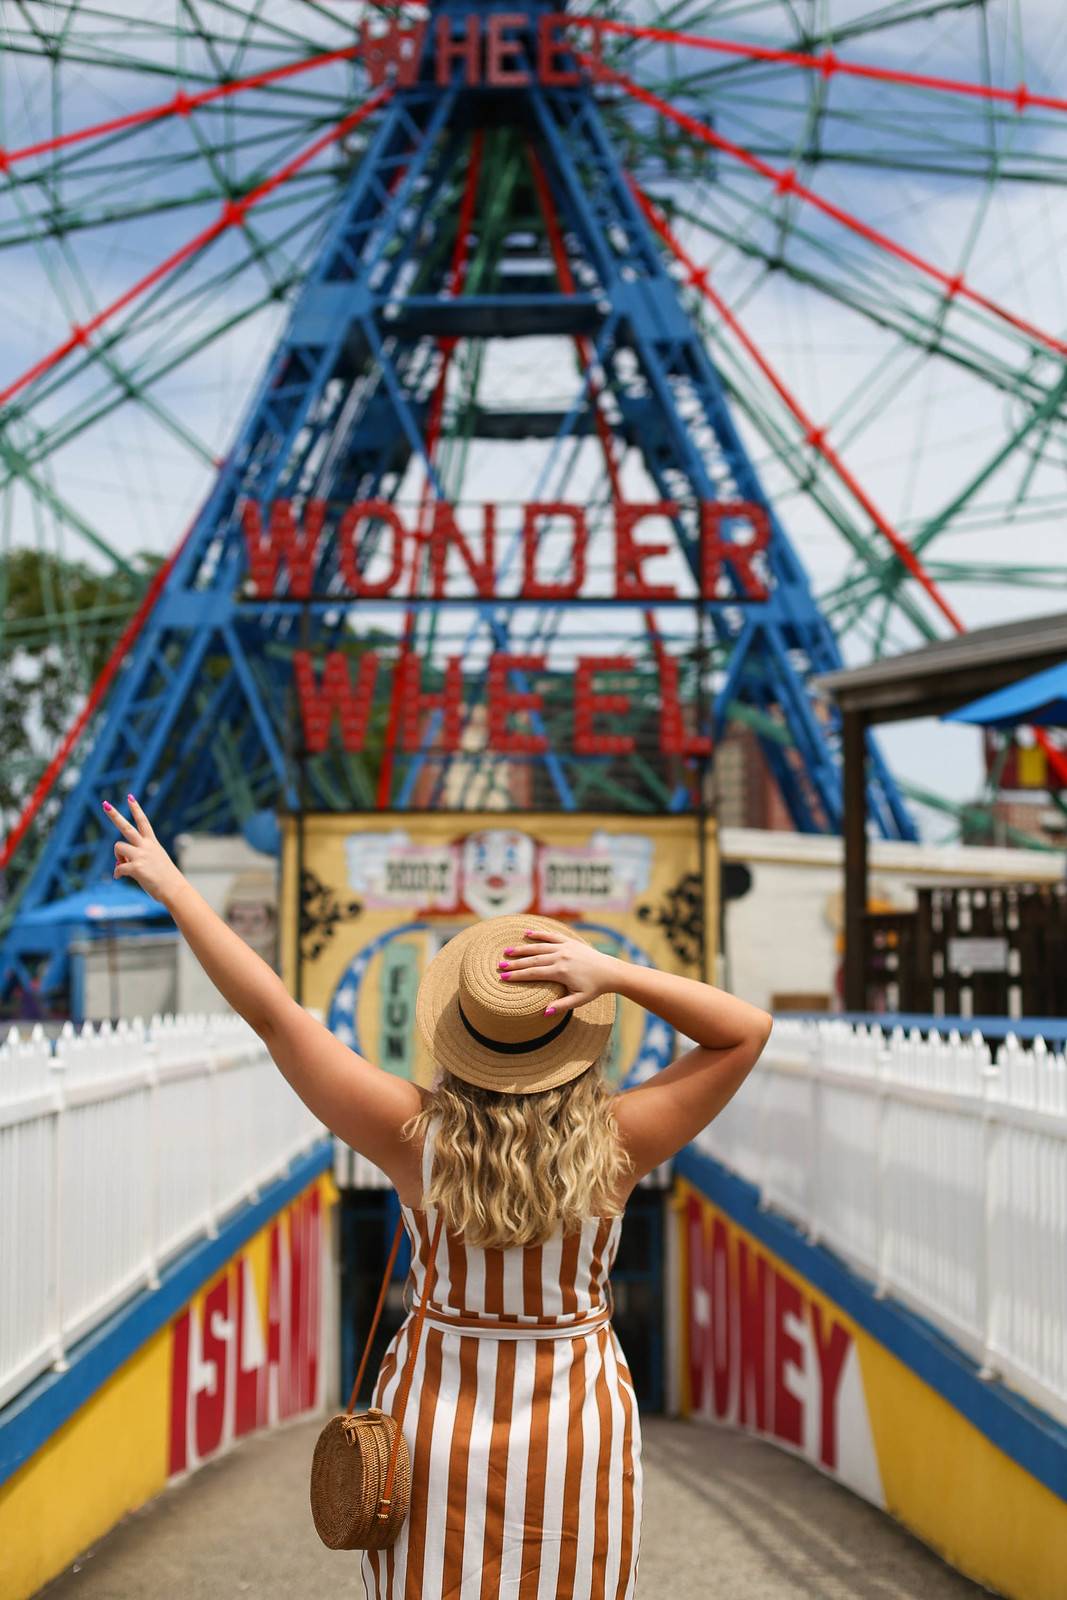 Vintage Inspired Summer Outfits | Coney Island Brooklyn New York | Coney Island Photoshoot | Wonder Wheel | Amusement Park Photo Ideas | Retro Summer Clothes